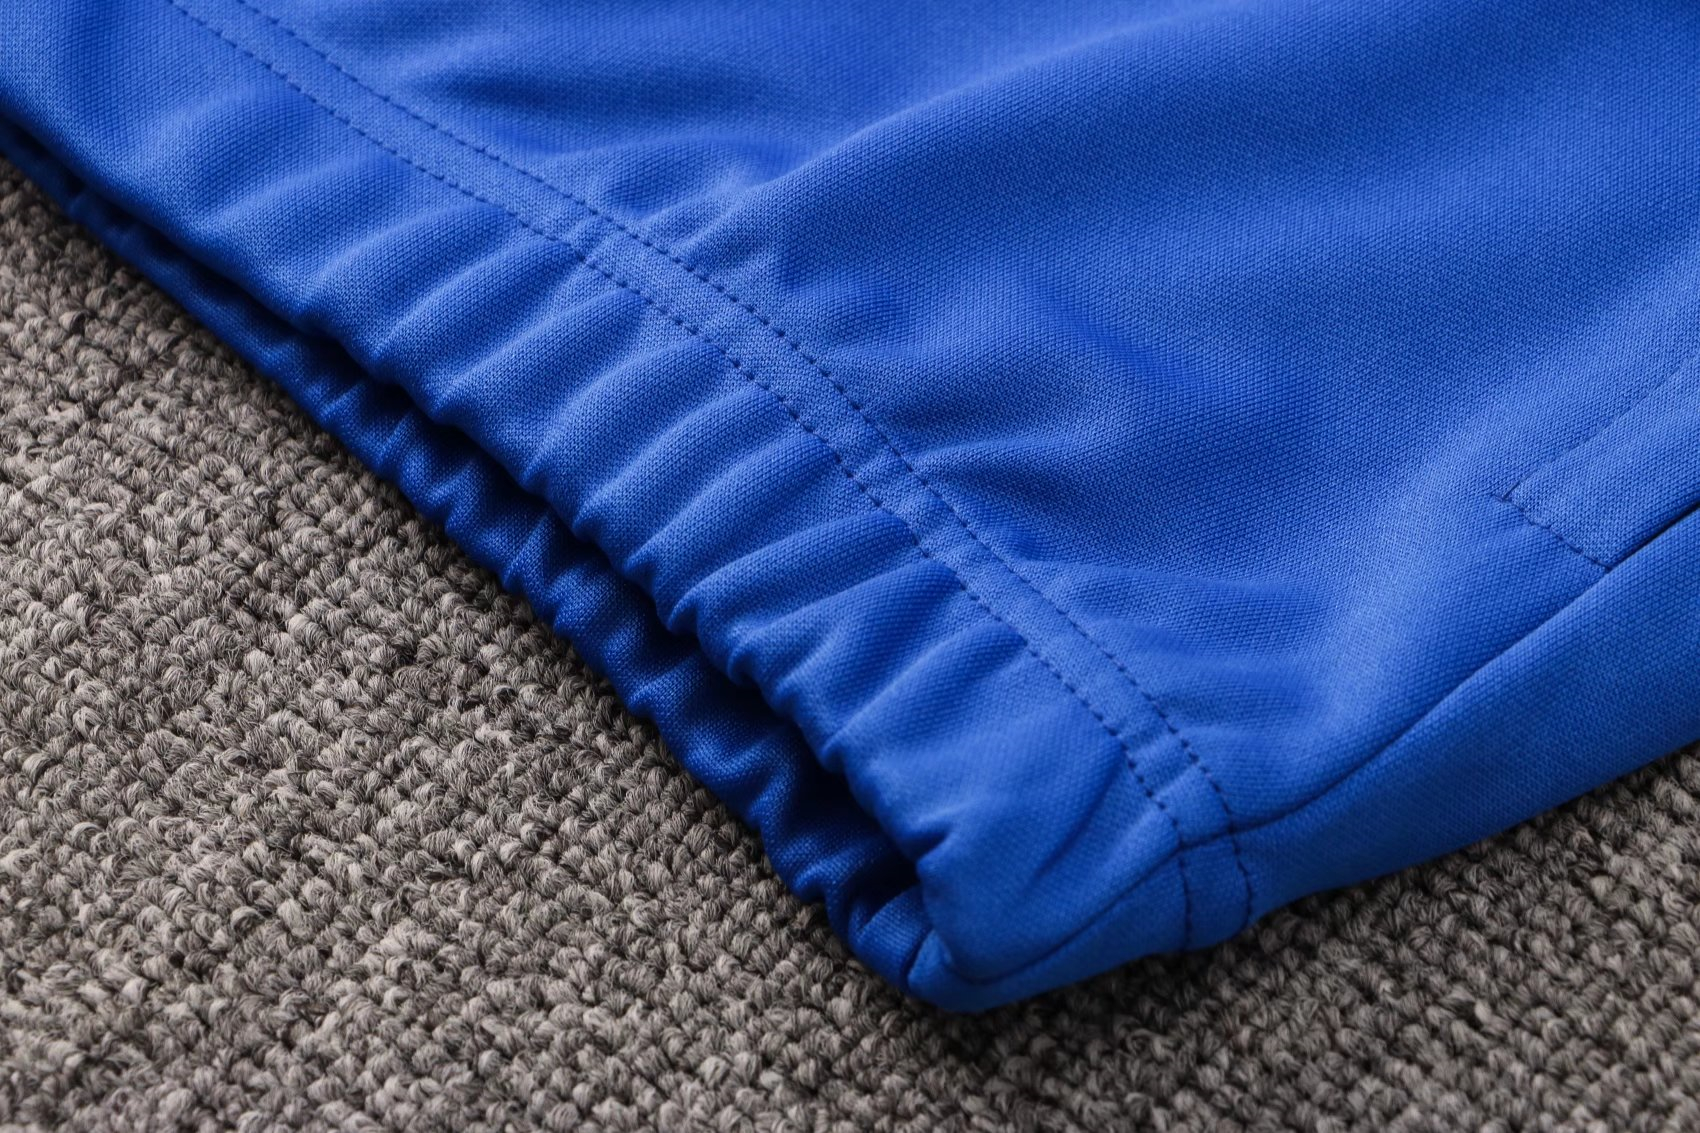 Manchester United Soccer Traning Suit (Jacket + Pants) Blue Mens 2021/22